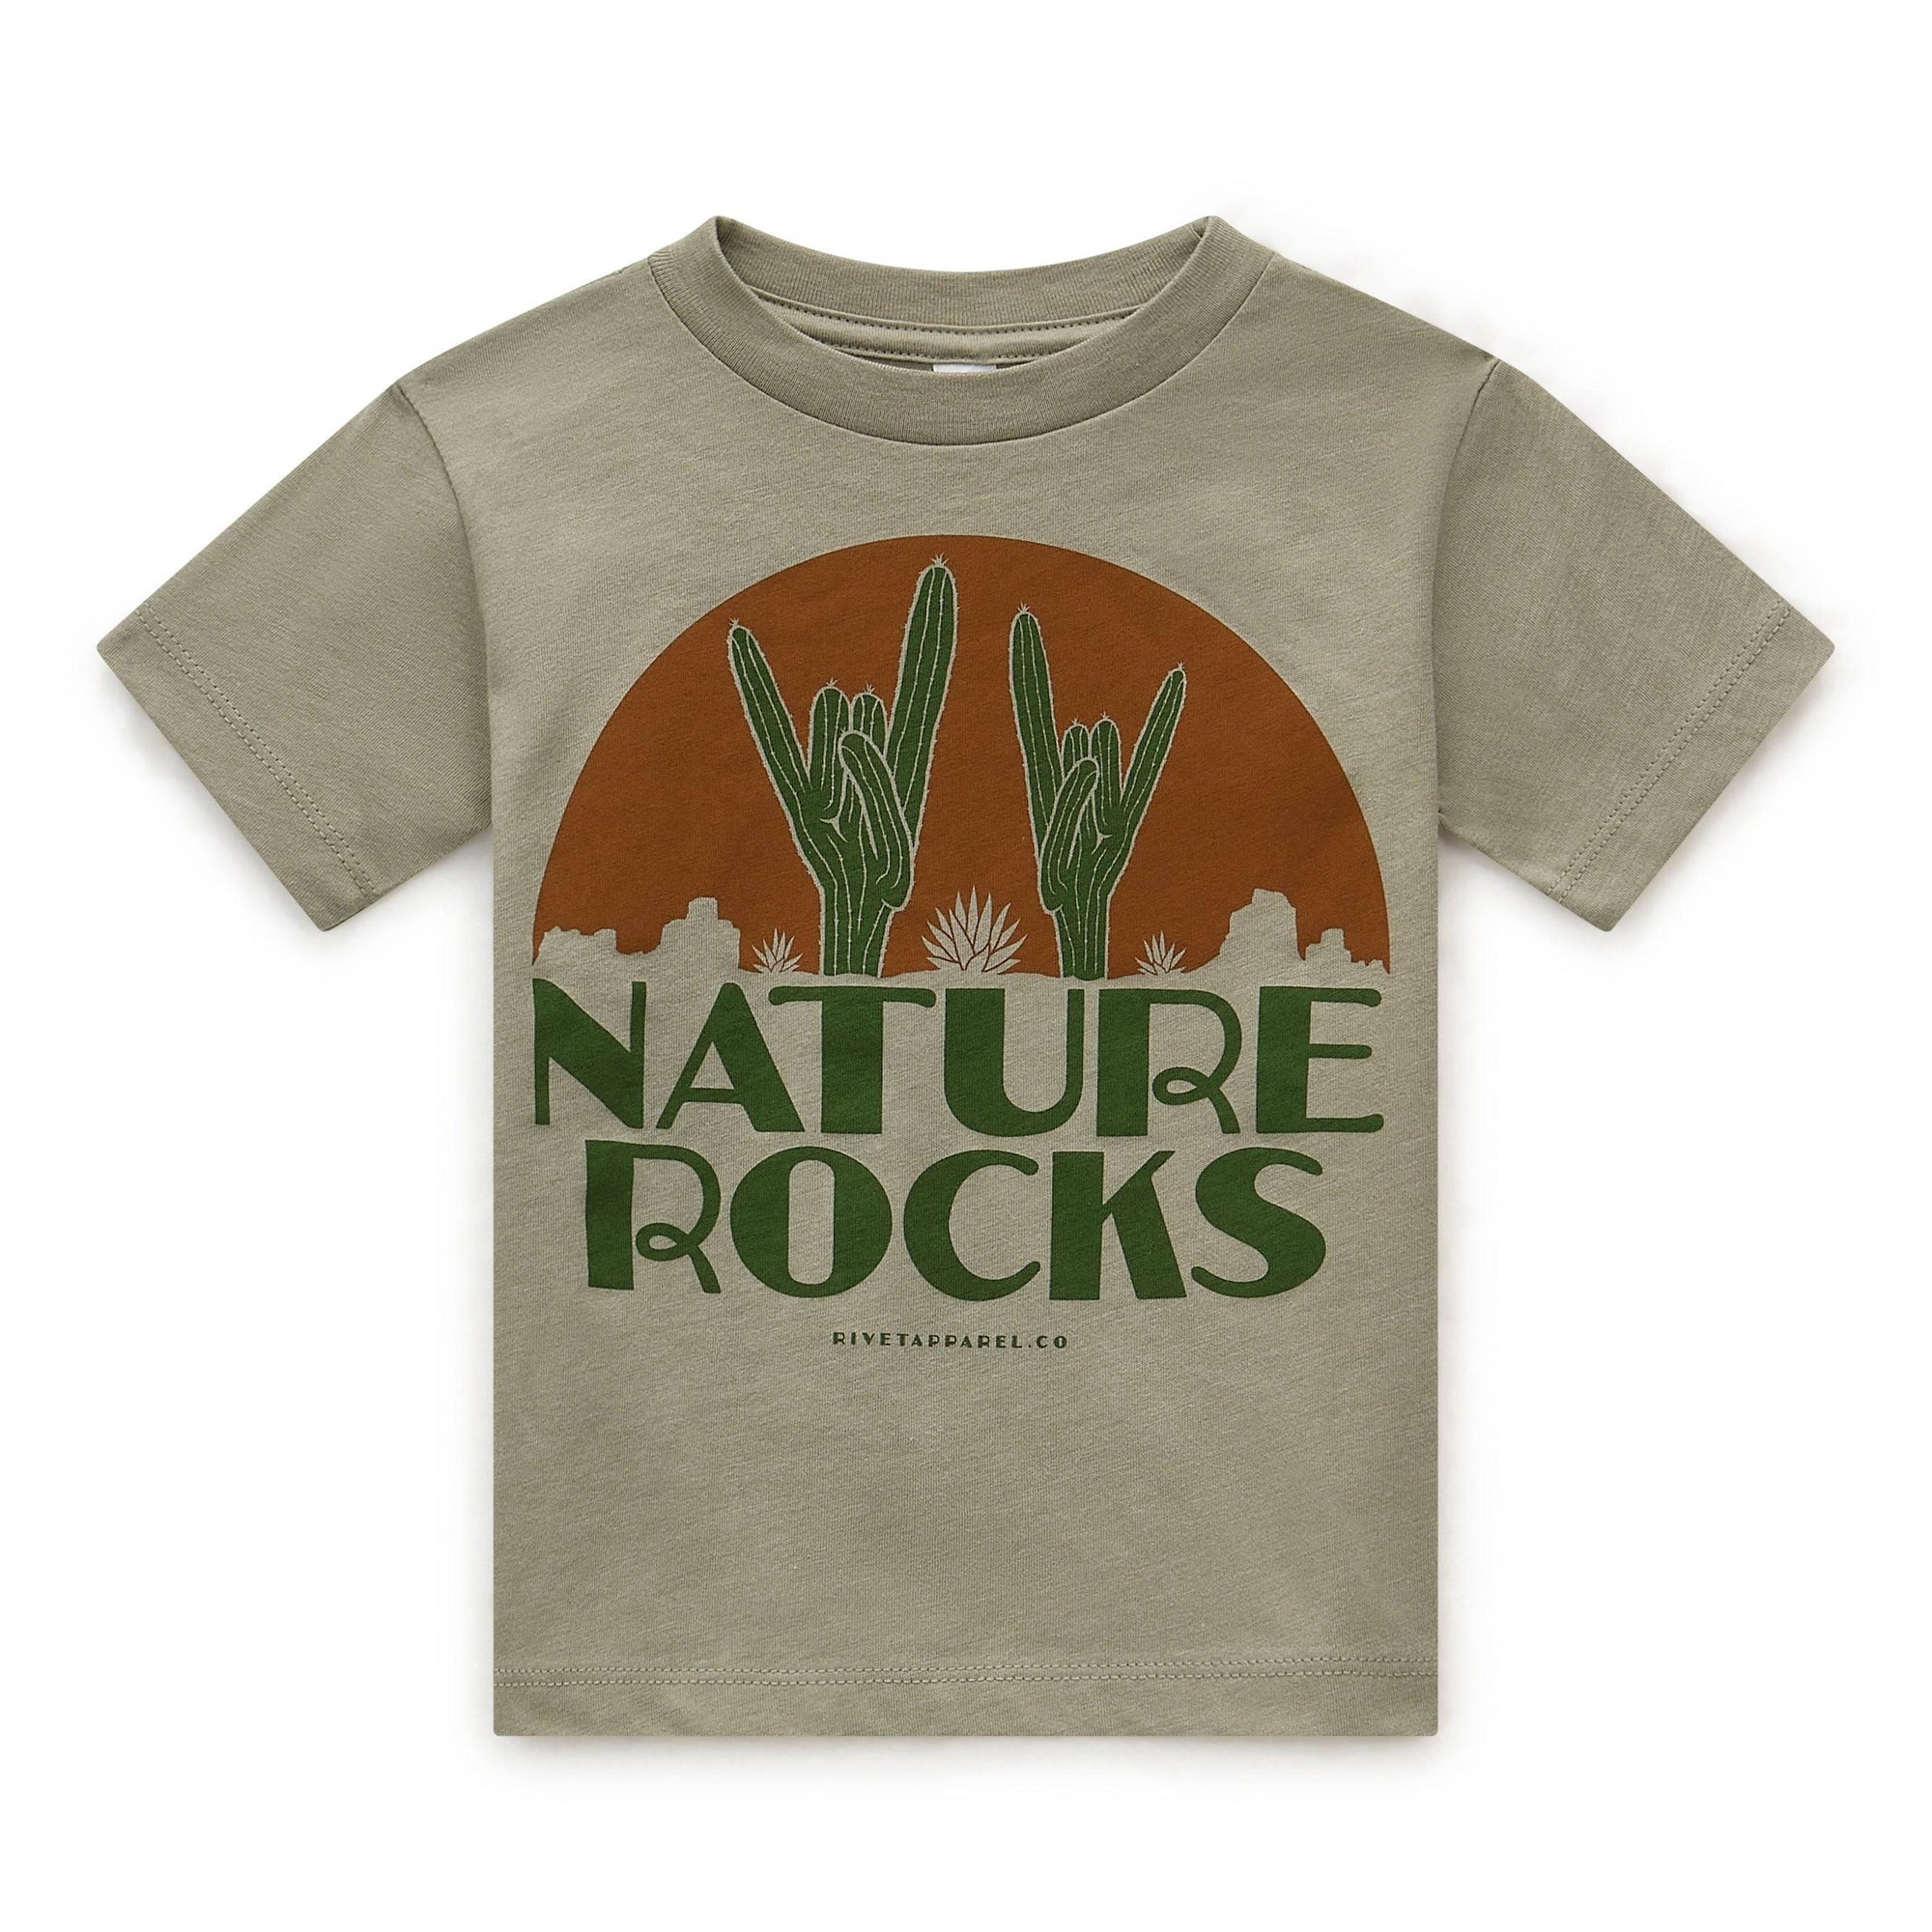 Rivet Apparel Co • Nature Rocks T-Shirt - All Things Dylan